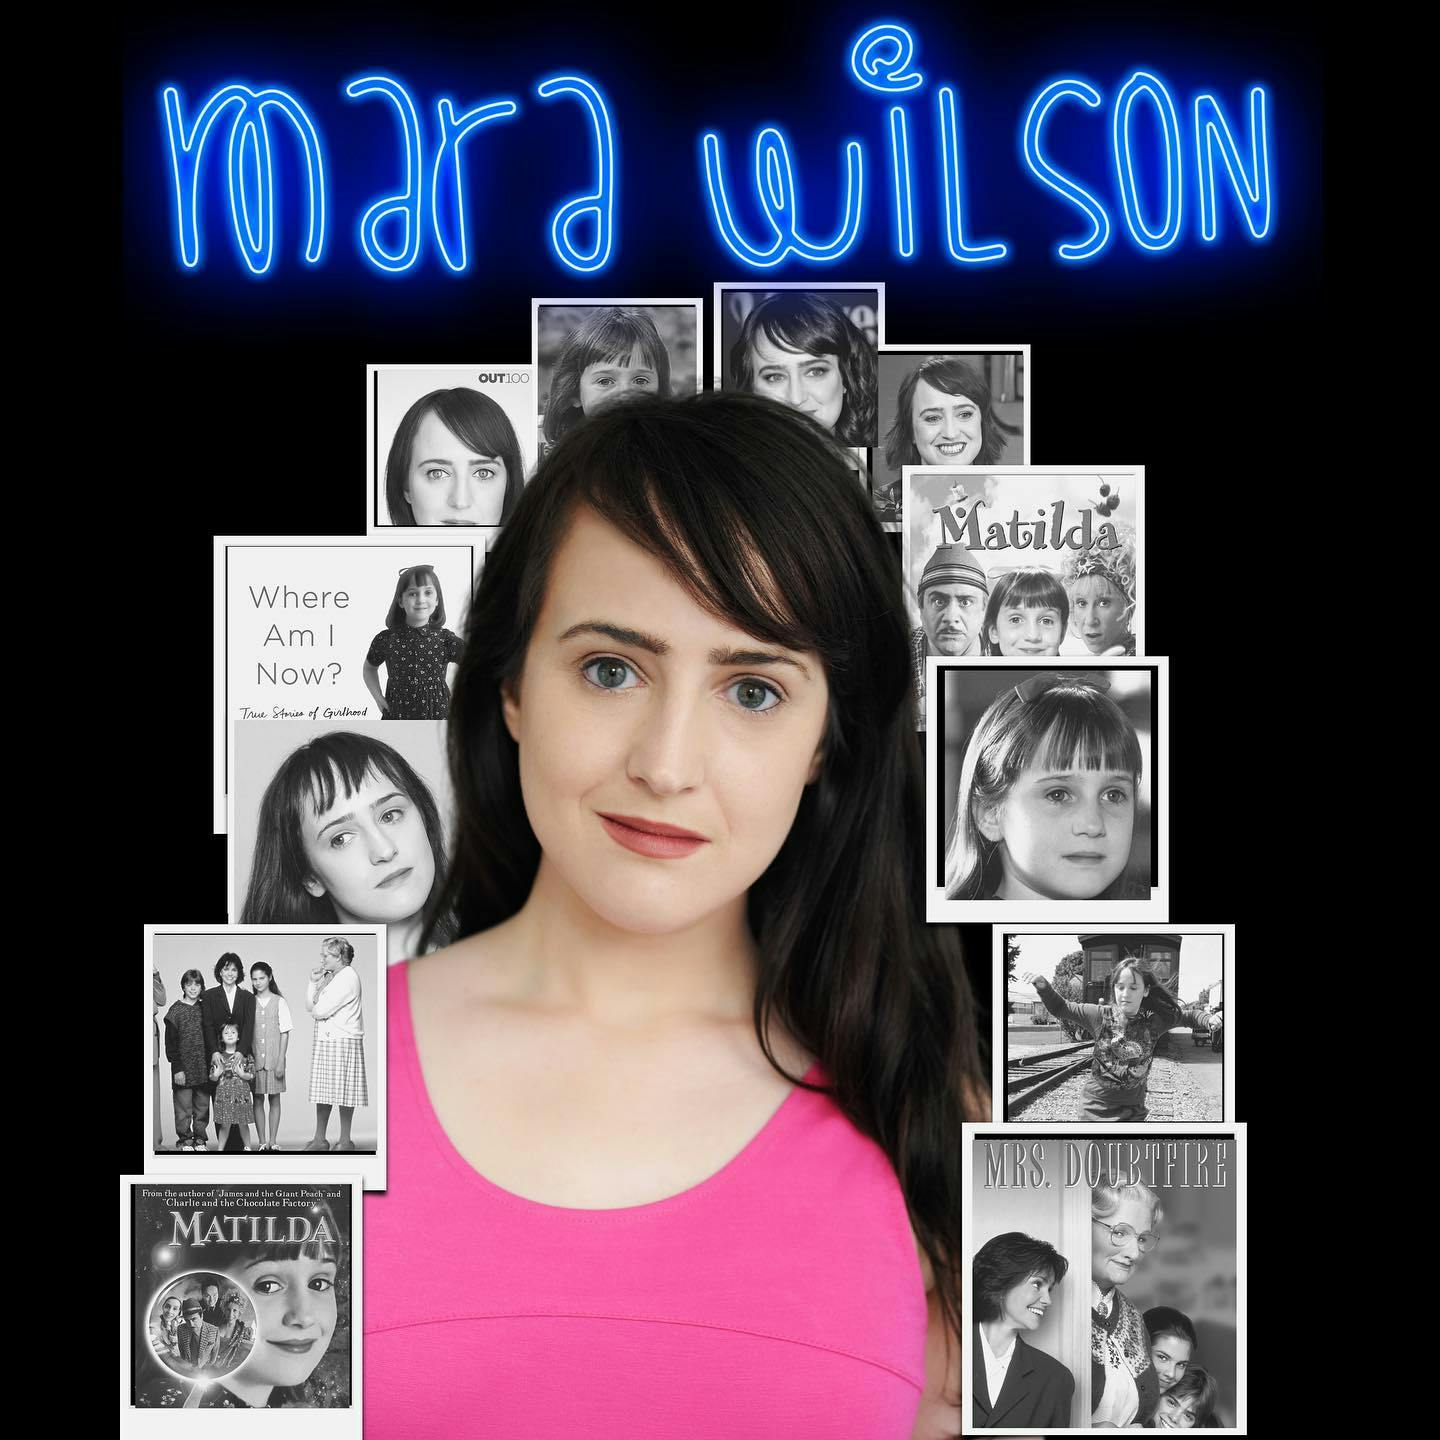 Former Child Star Mara Wilson on Breaking Free of Her Good Girl Past